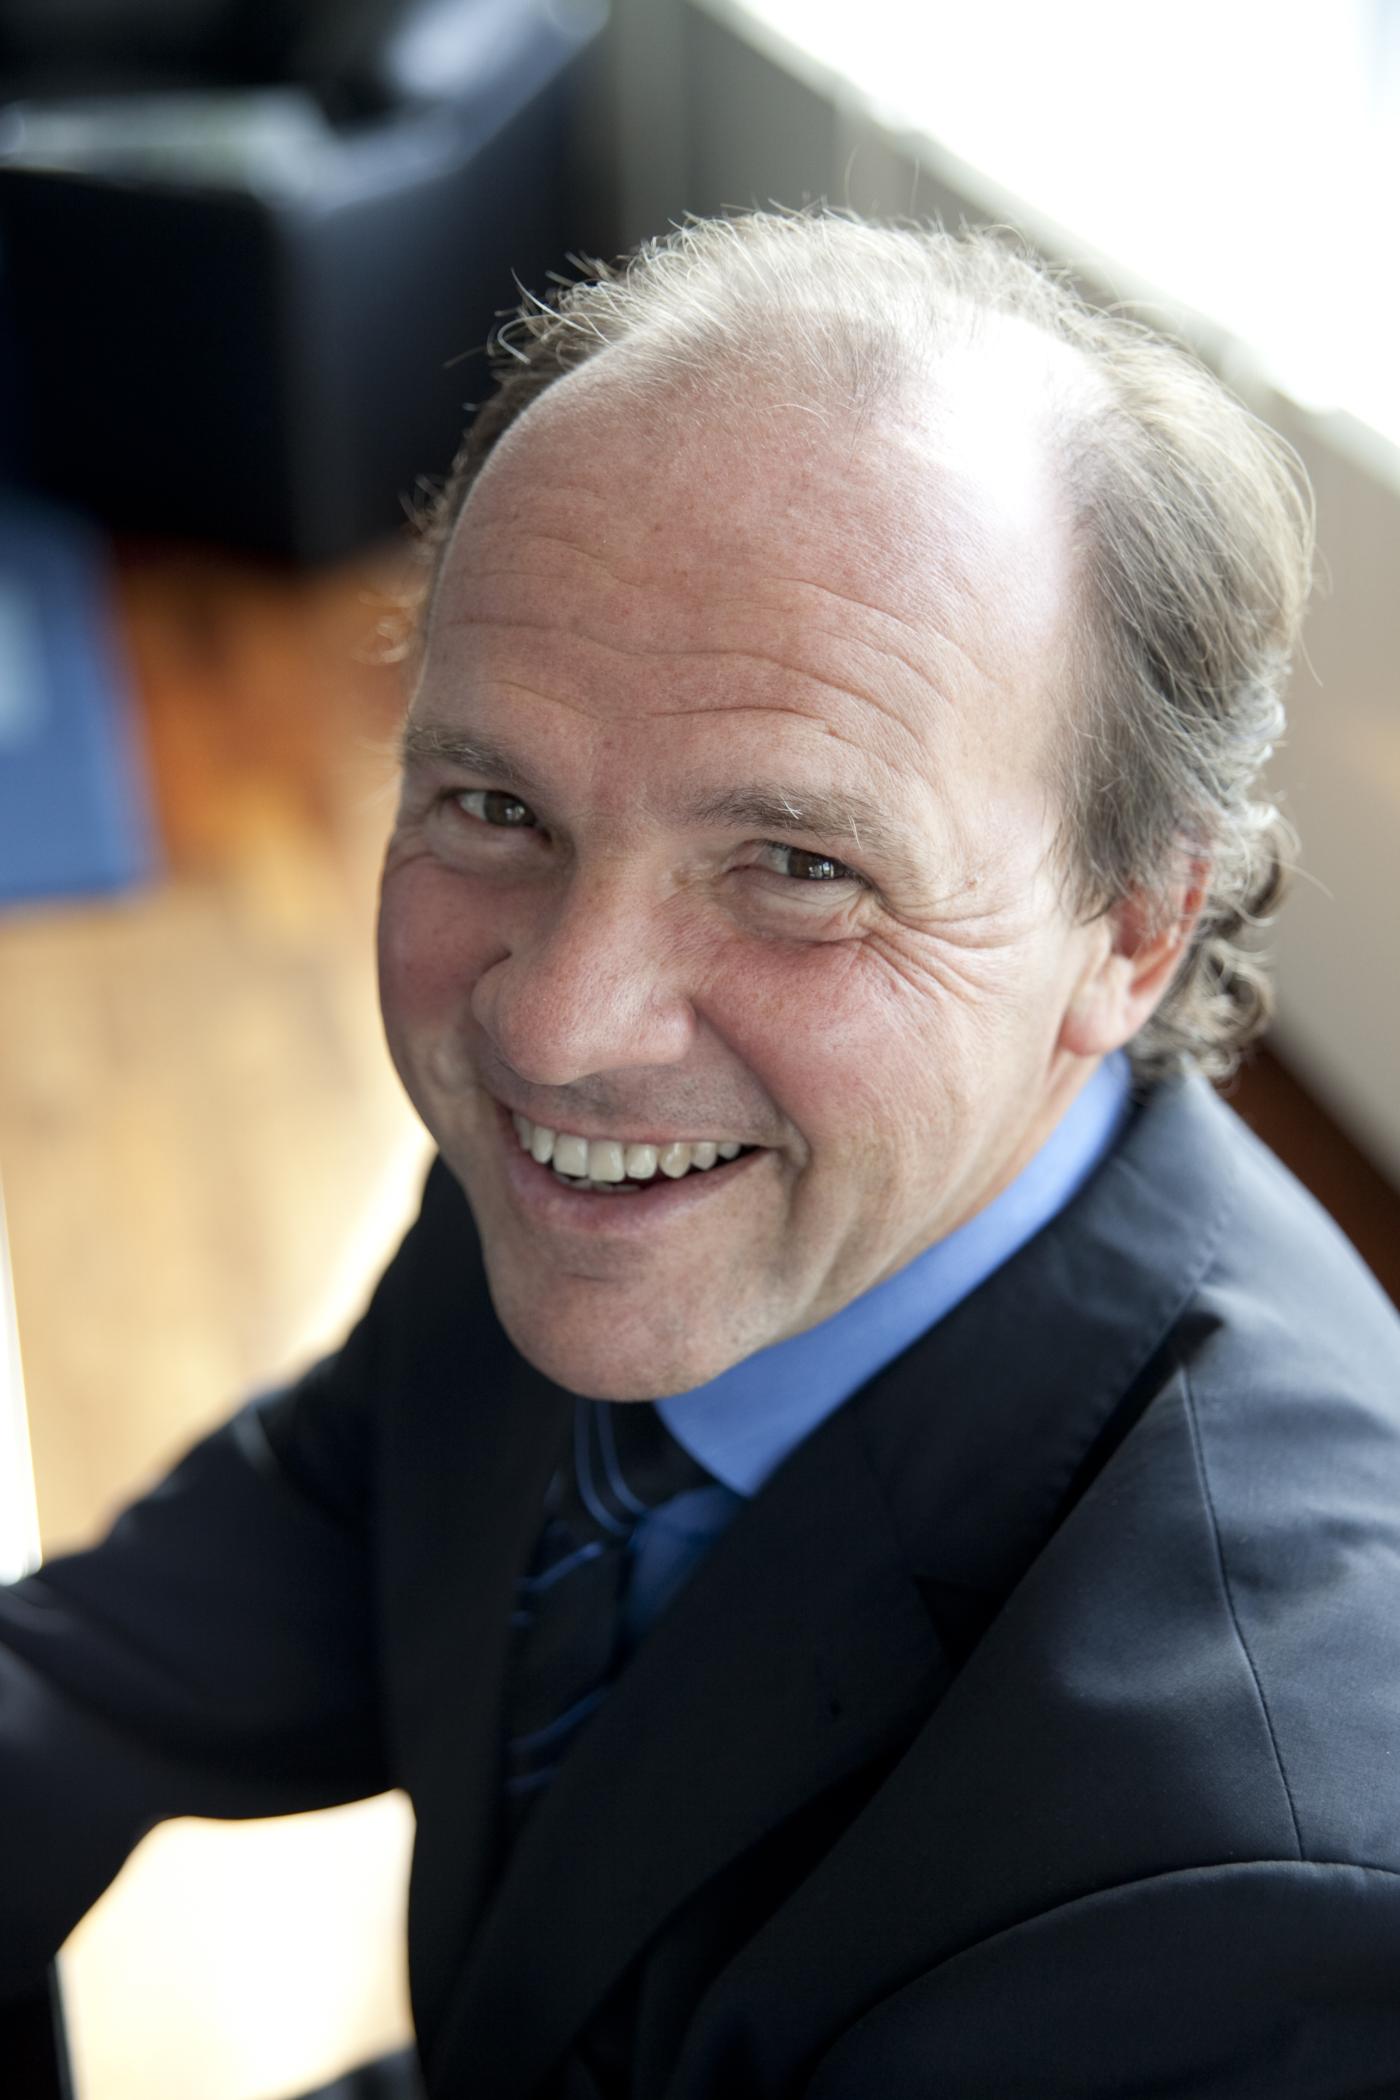 Vlaams minister van Werk, Economie en Innovatie Philippe Muyters